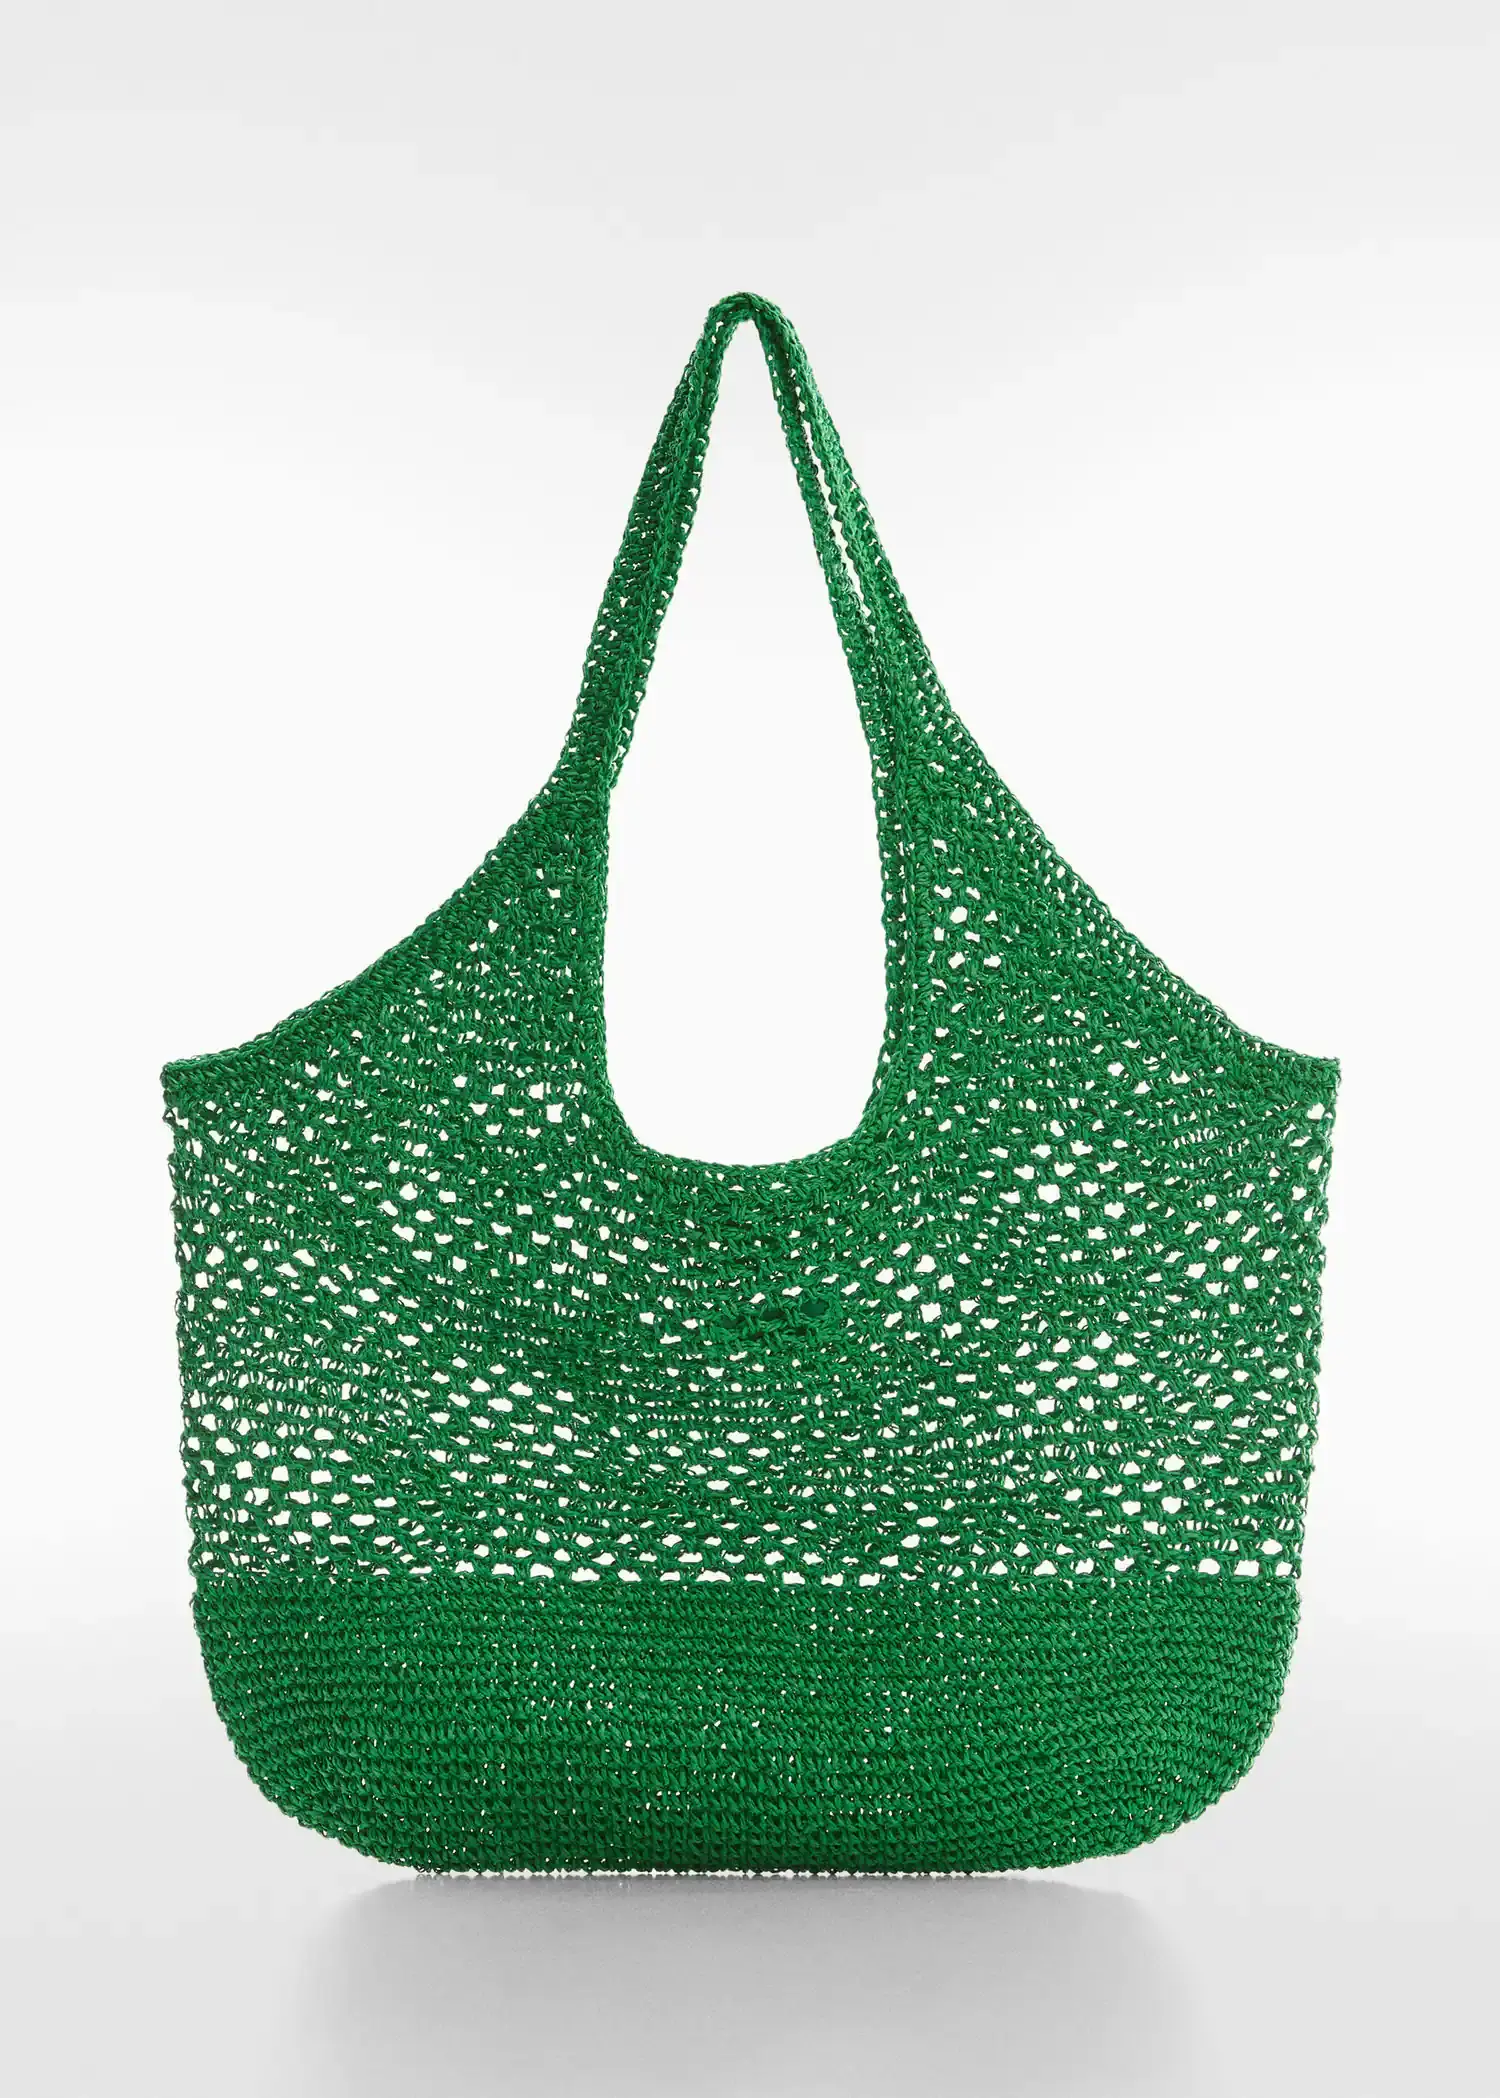 Mango Natural fibre sack bag. a crocheted green bag on a white background. 